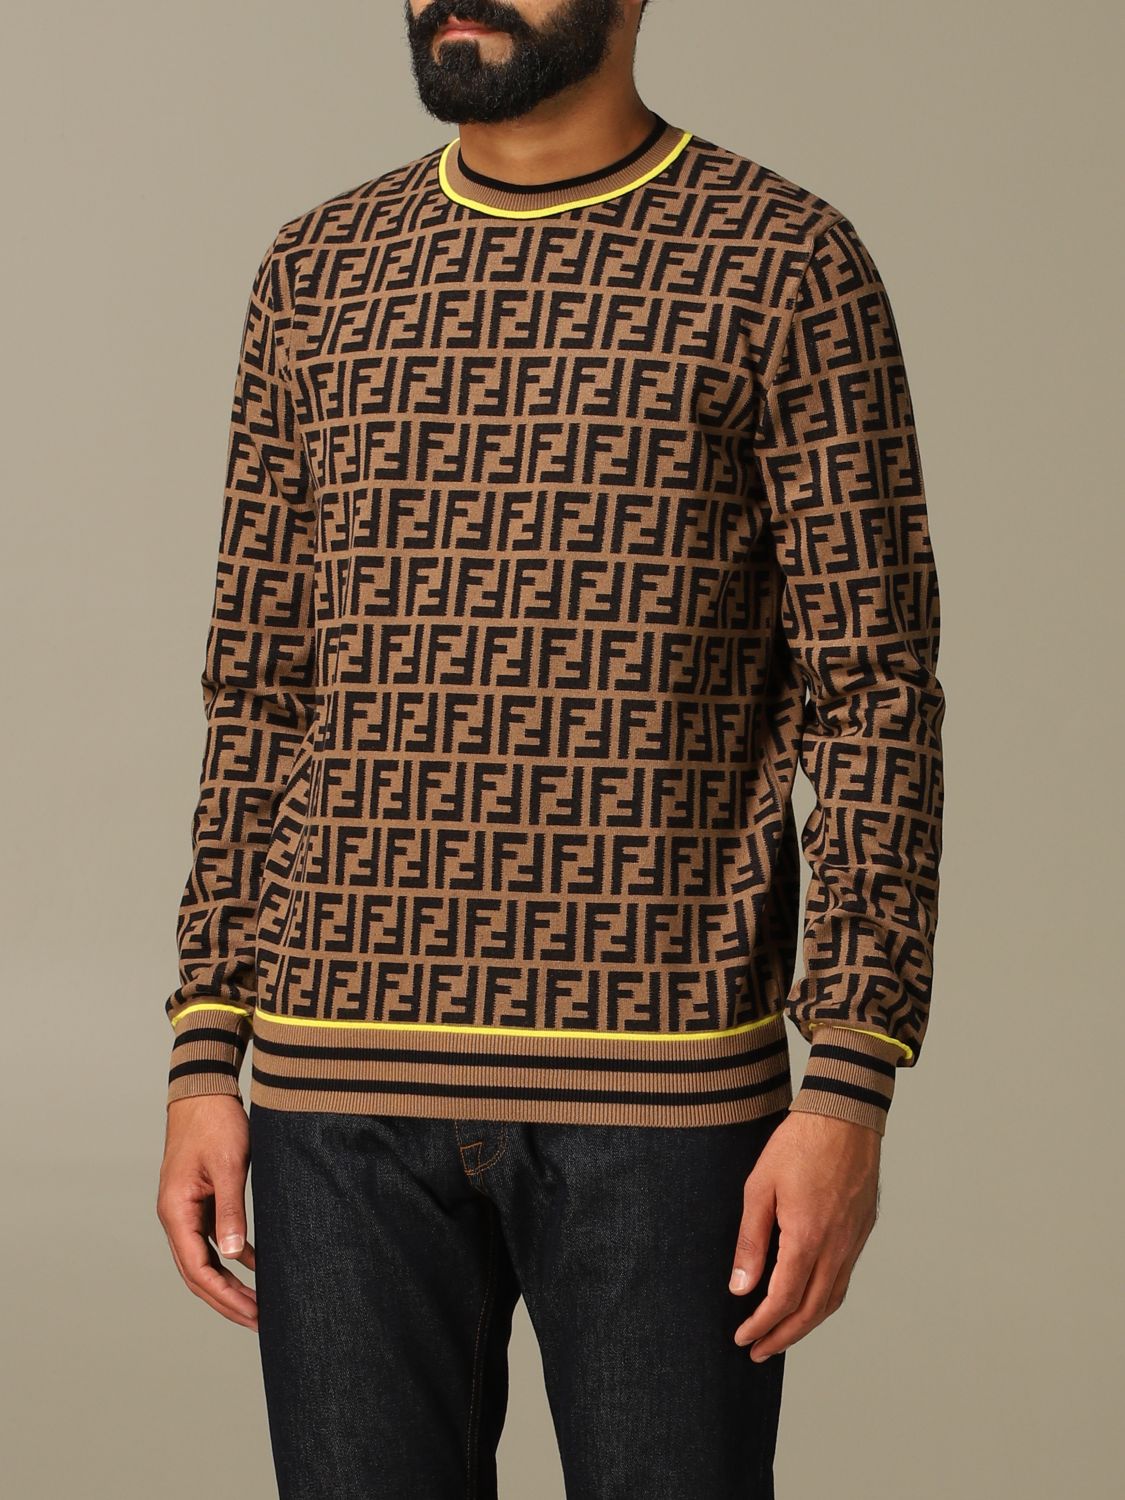 FENDI: shirt with all-over FF logo | Sweater Fendi Men Beige | Sweater ...